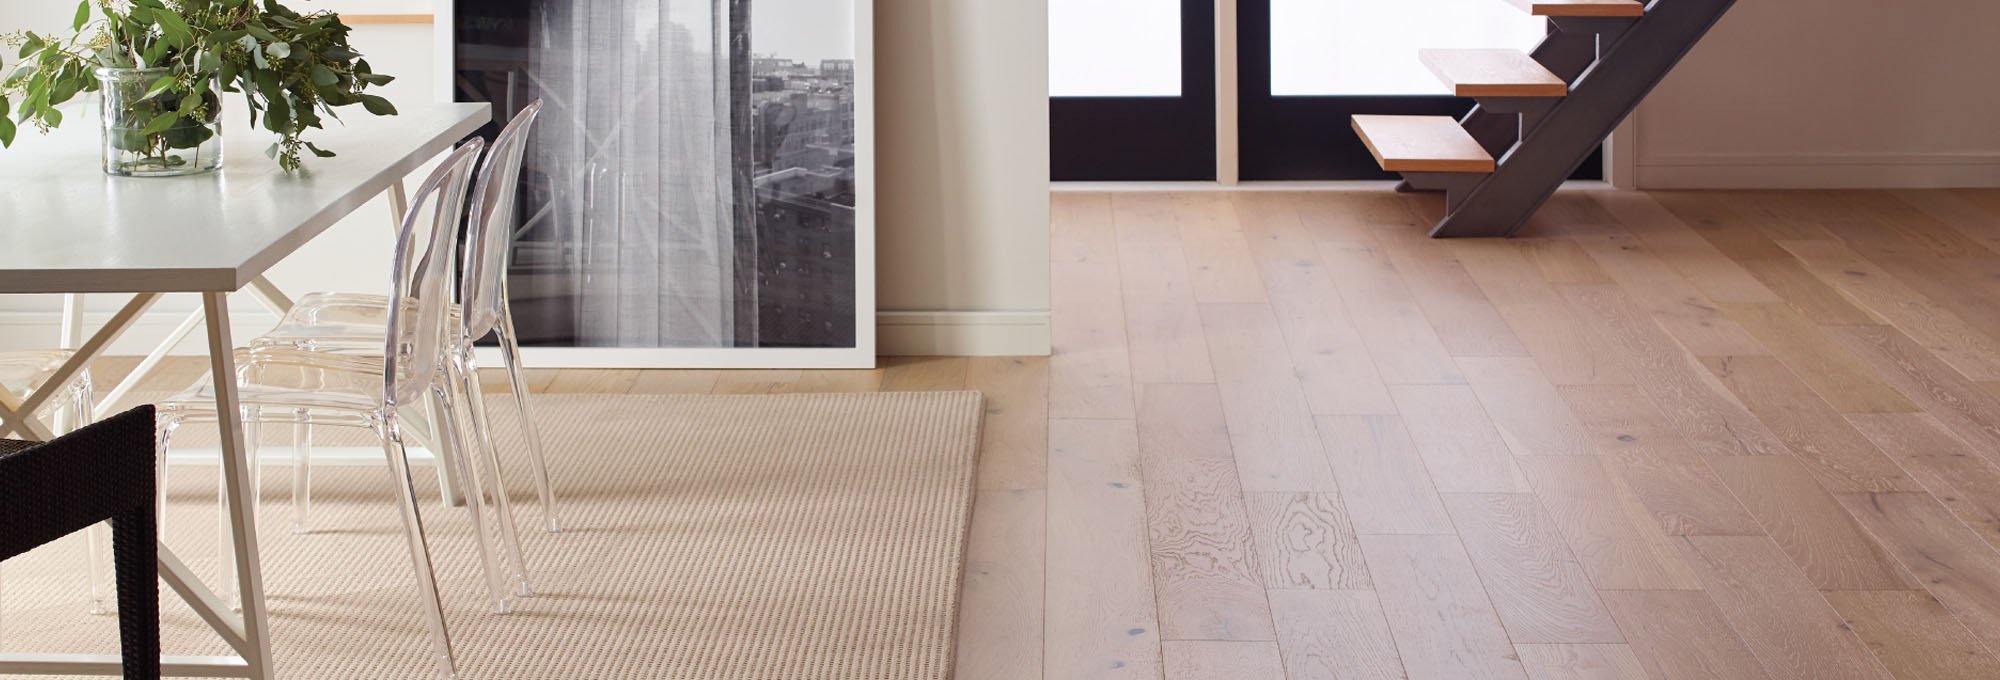 Hardwood flooring with Maximum Carpets & Flooring in Lynbrook, New York